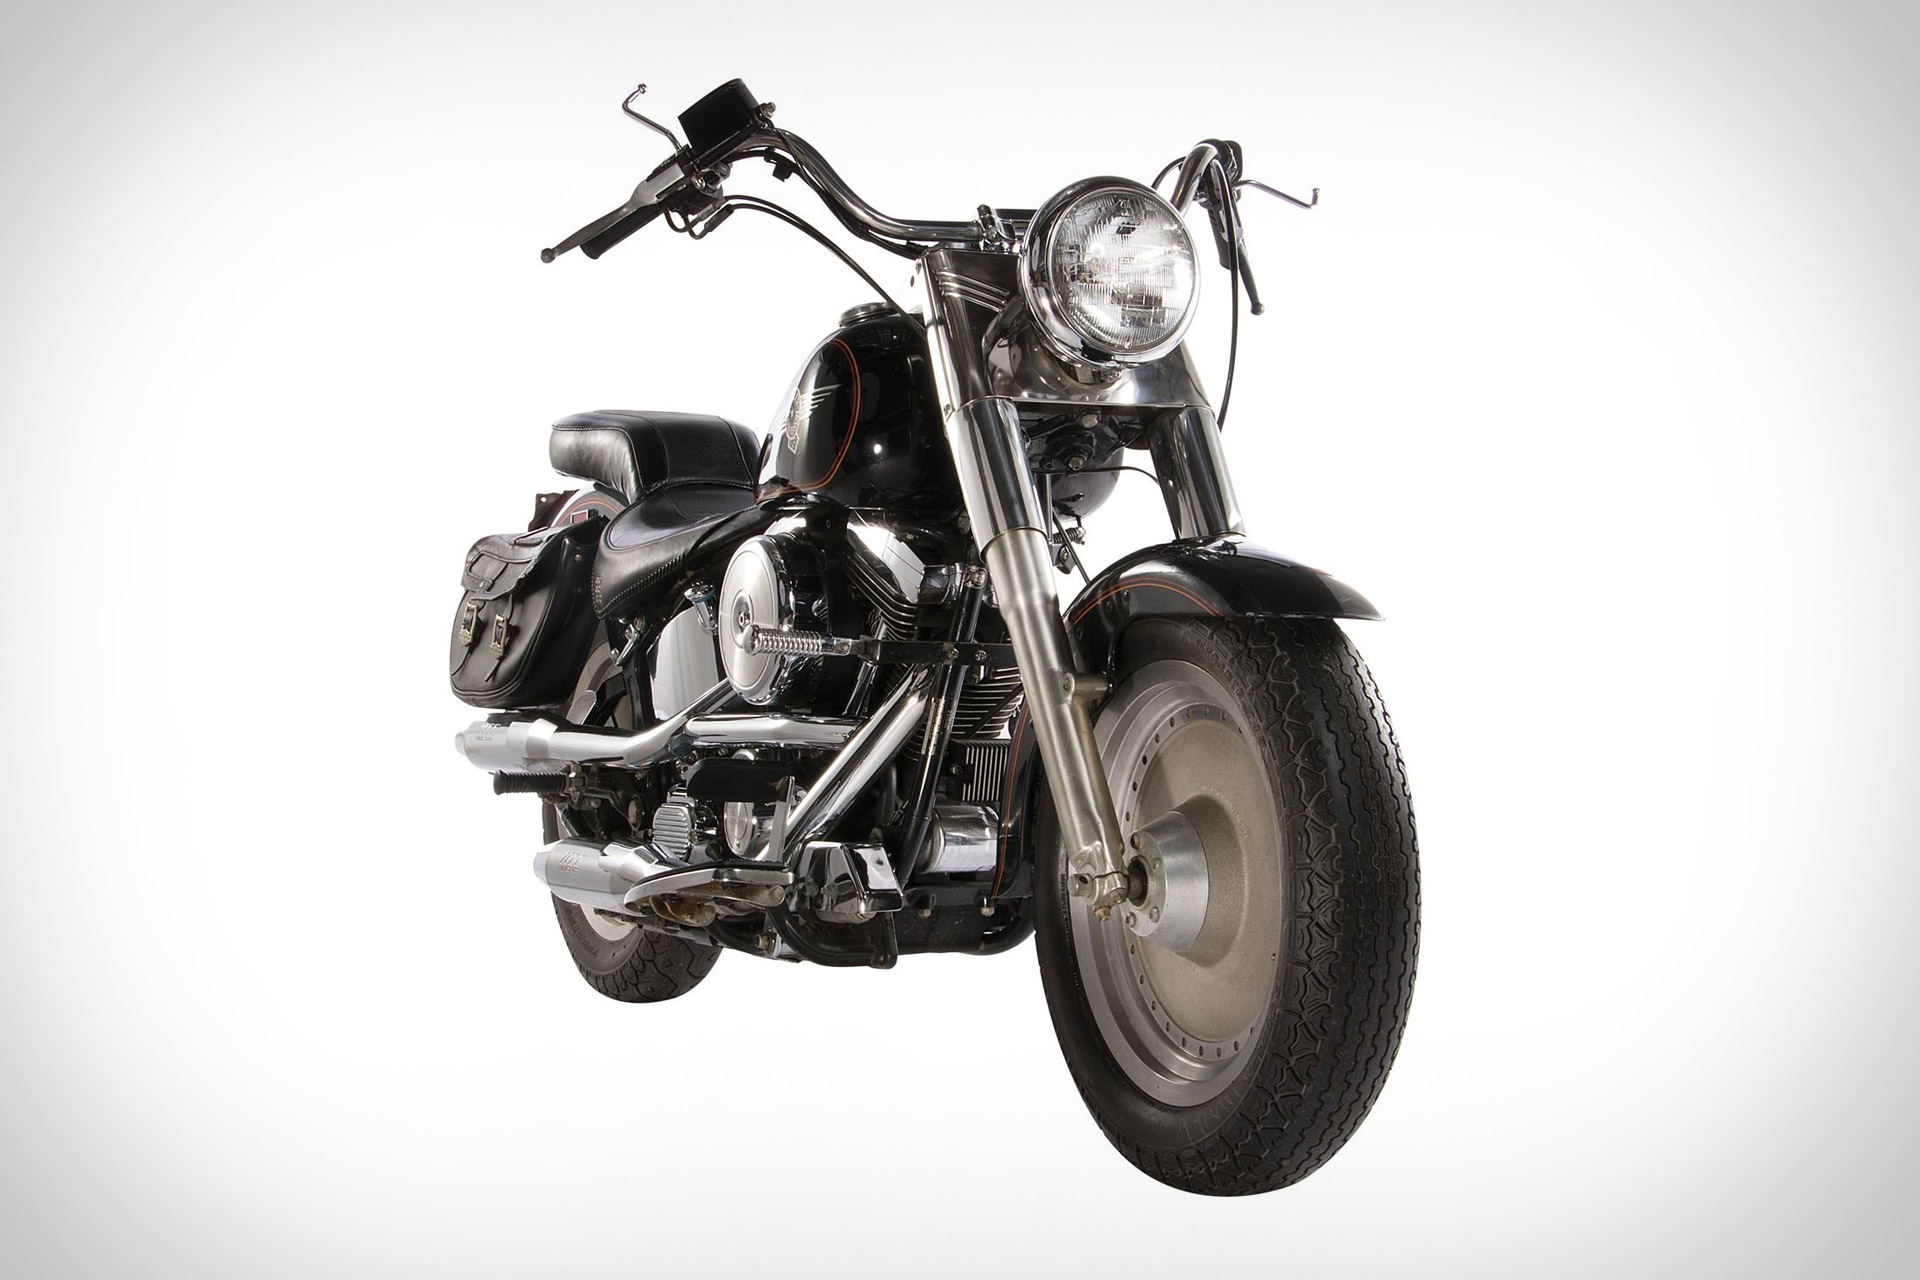 Terminator 2 Harley Davidson Motorcycle Uncrate